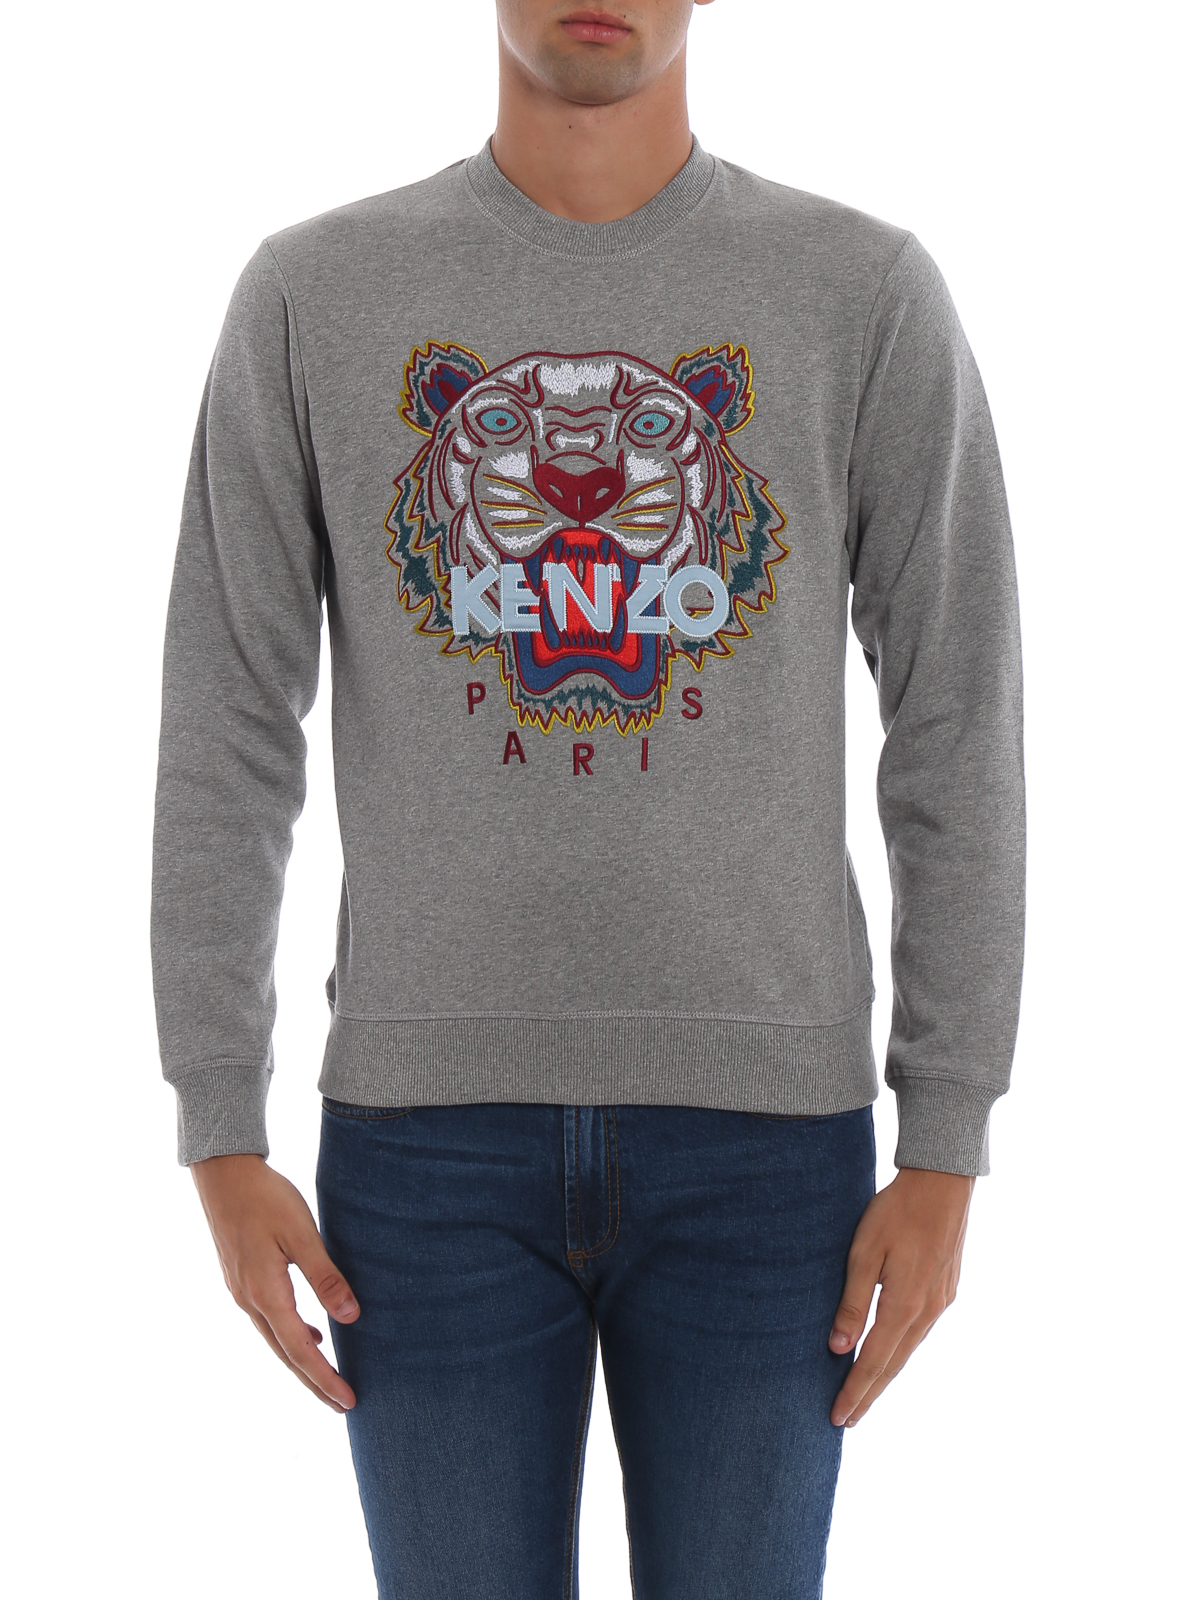 grey kenzo sweater